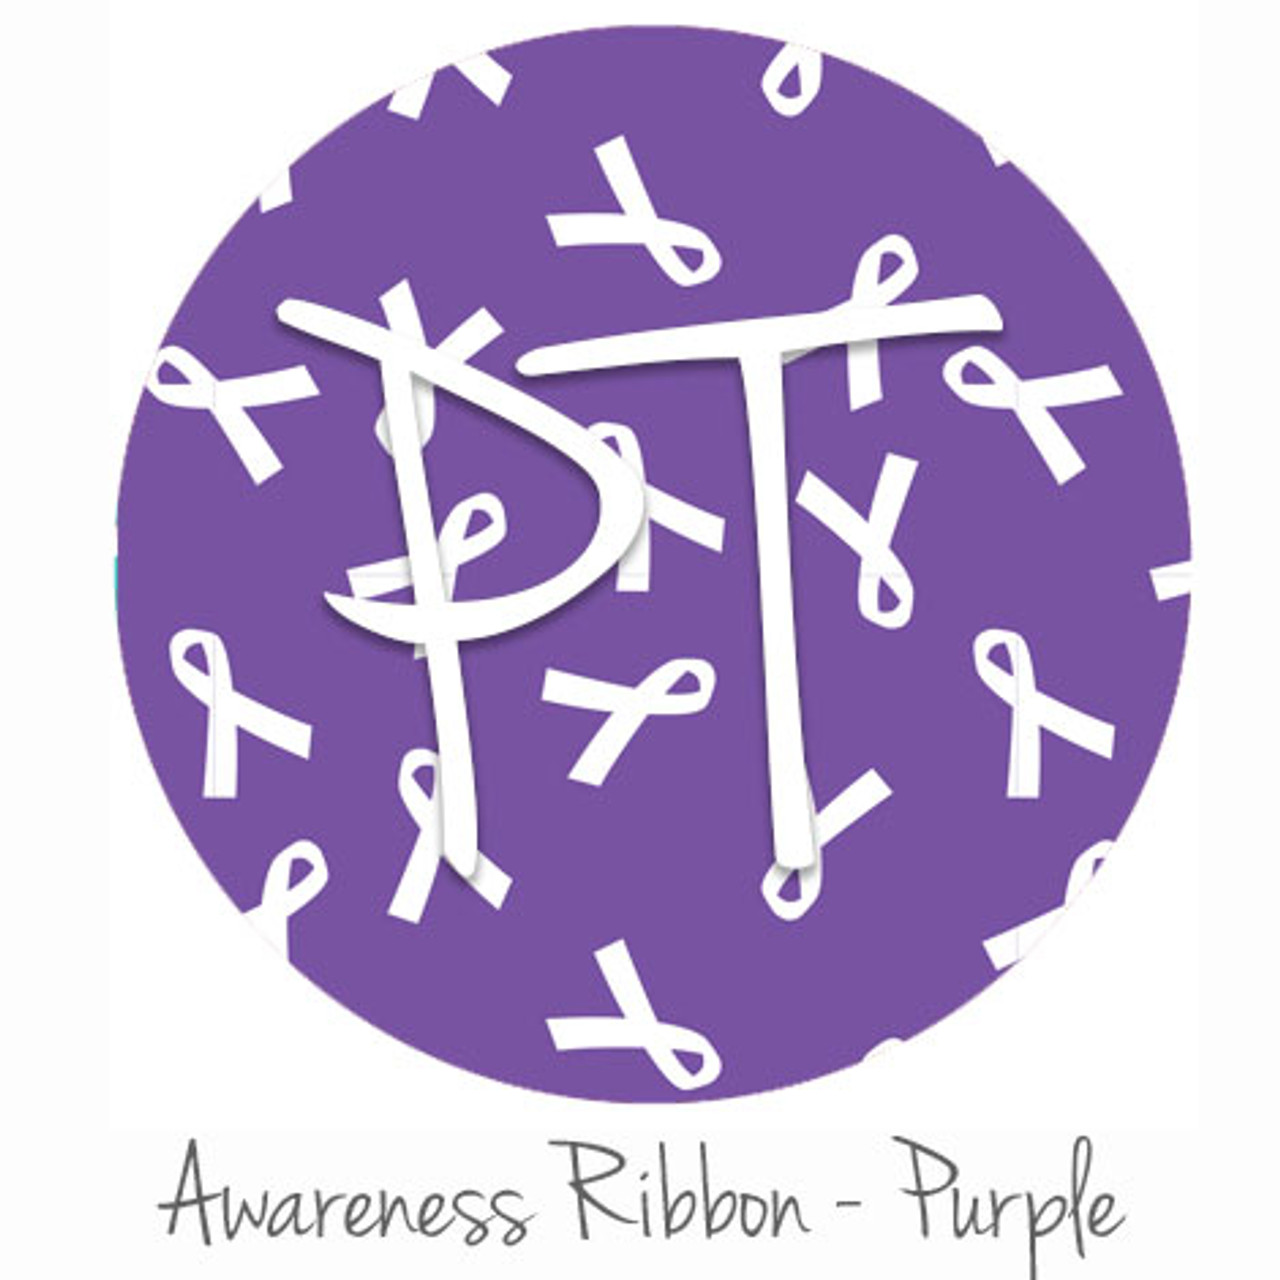 12x12 Permanent Patterned Vinyl - Awareness Ribbon - Purple - Expressions  Vinyl